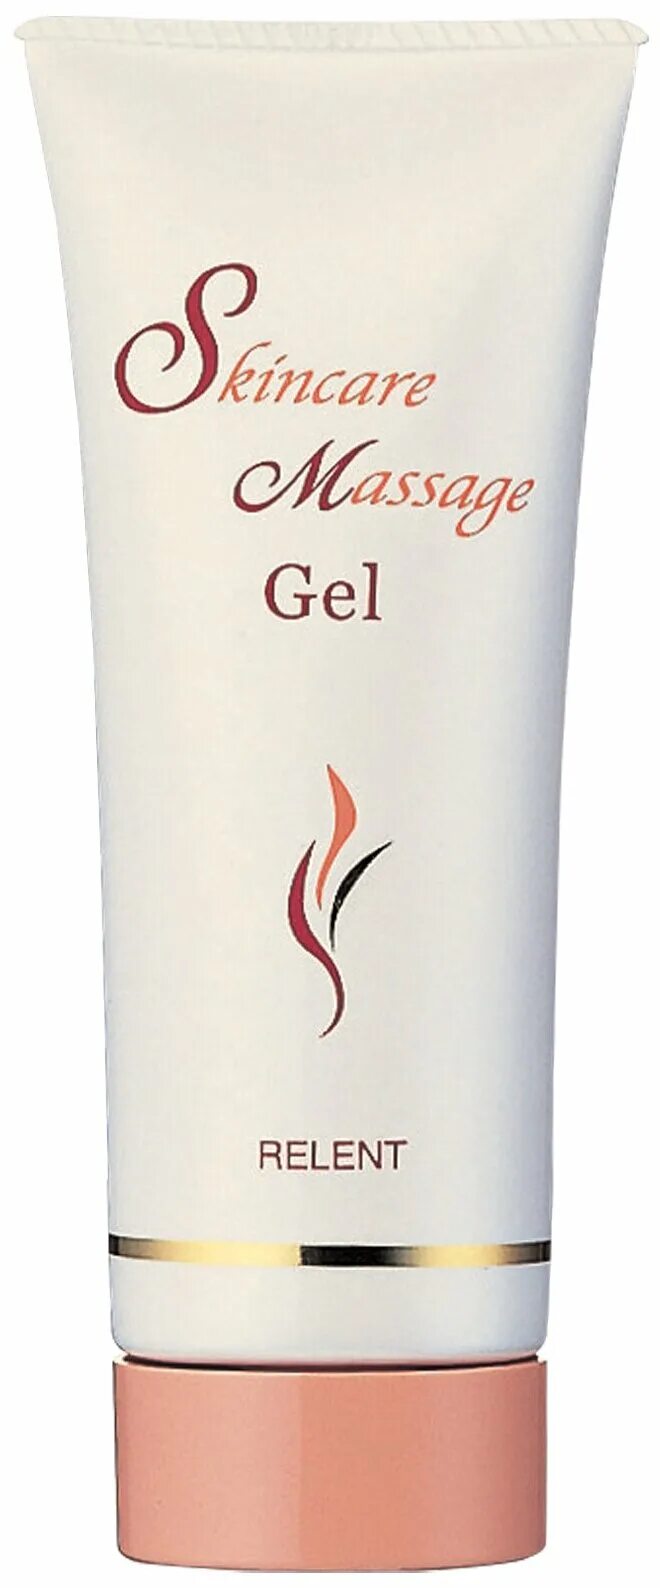 Massage gel. Массажный гель. Гель для массажа тела. Гель для массажа лица. Relent body Care massage Gel. Массажный гель для лица.